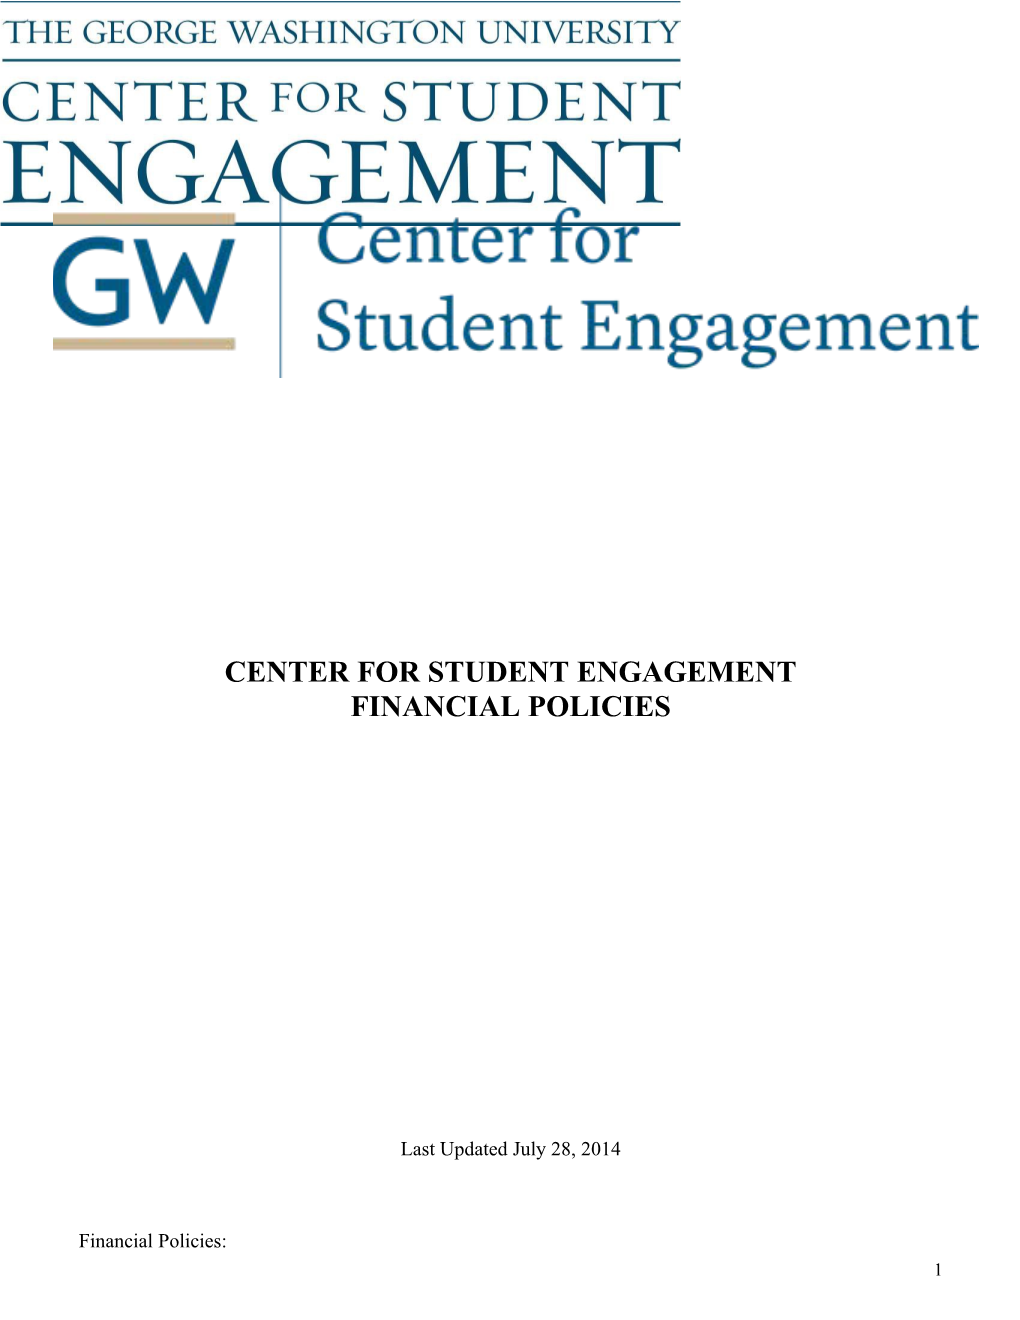 Center for Student Engagement